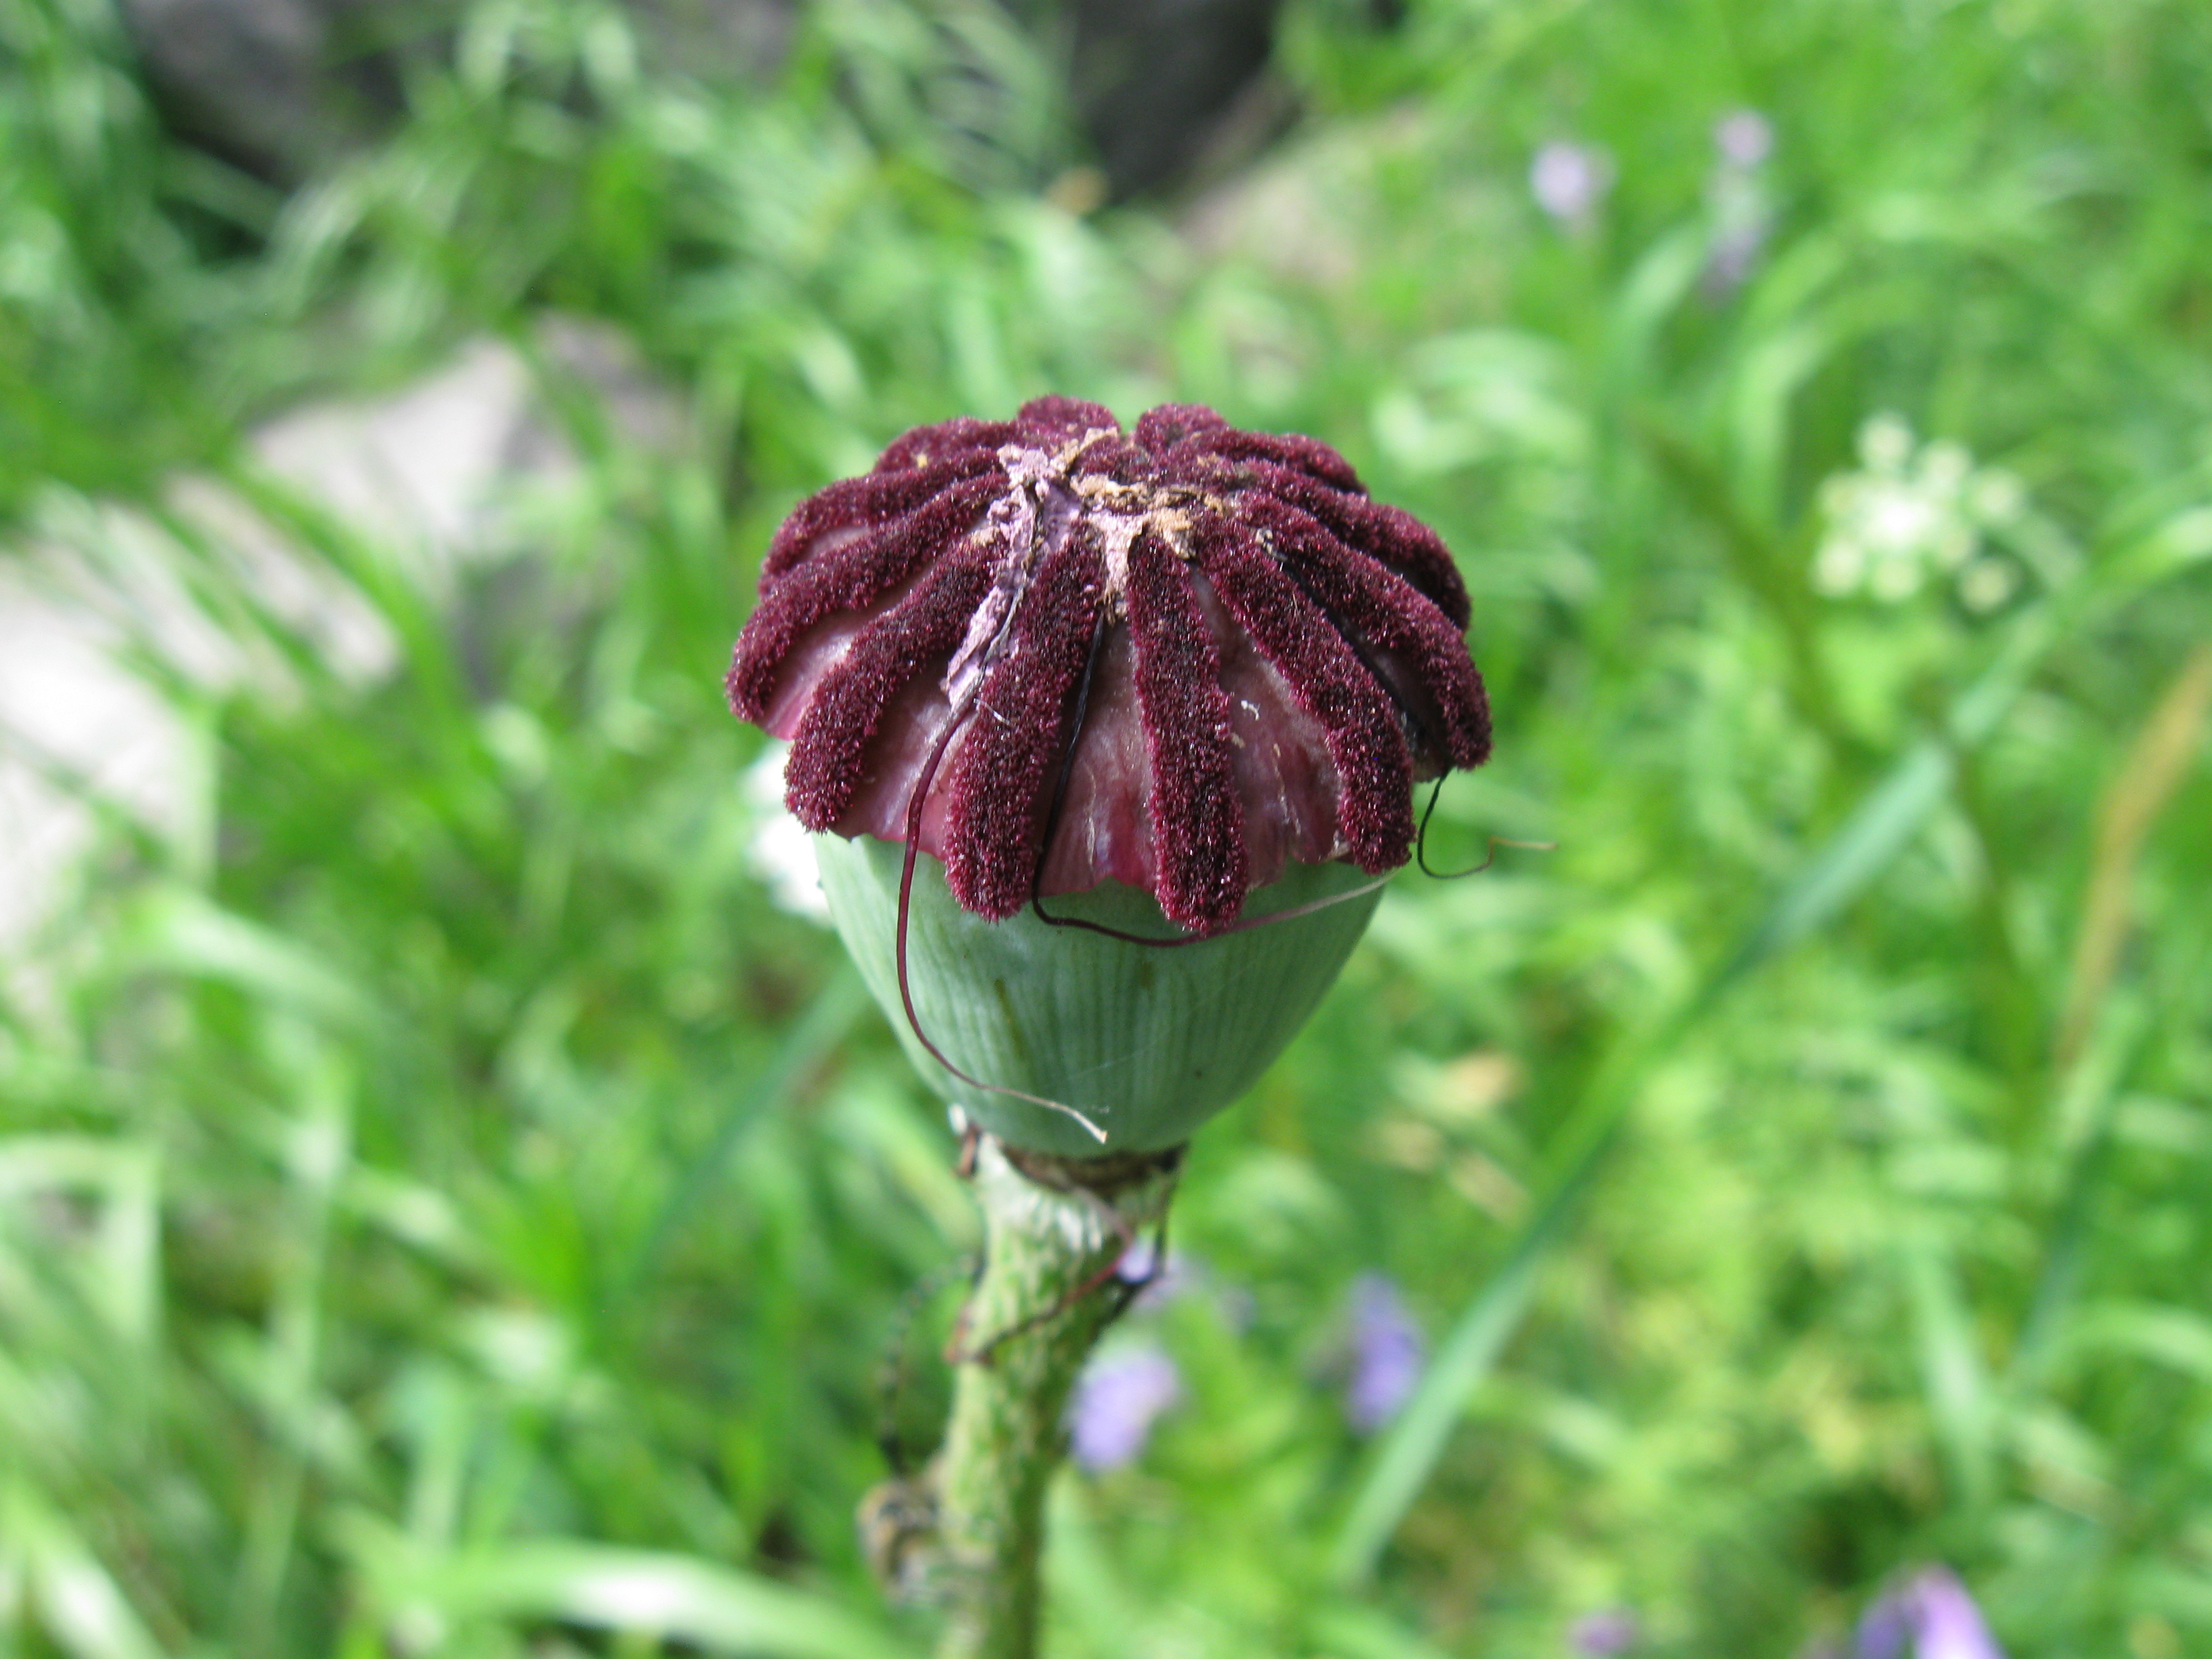 File:Poppy seed capsule.jpg - Wikimedia Commons